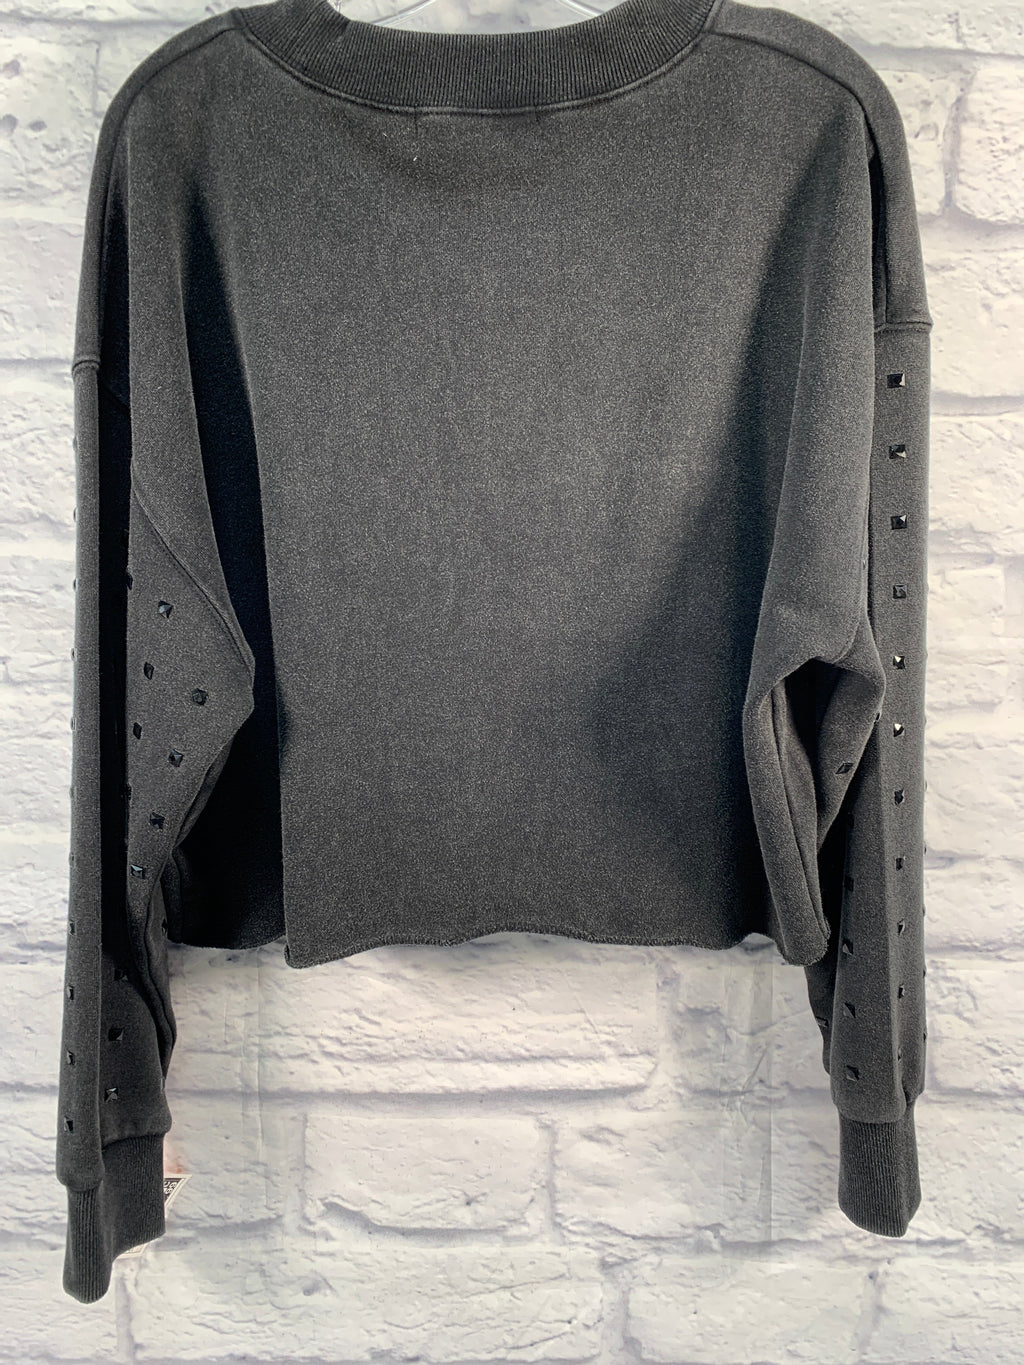 Kyodan: Outdoor gray, long sleeve, cozy, comfy sweatshirt. Large